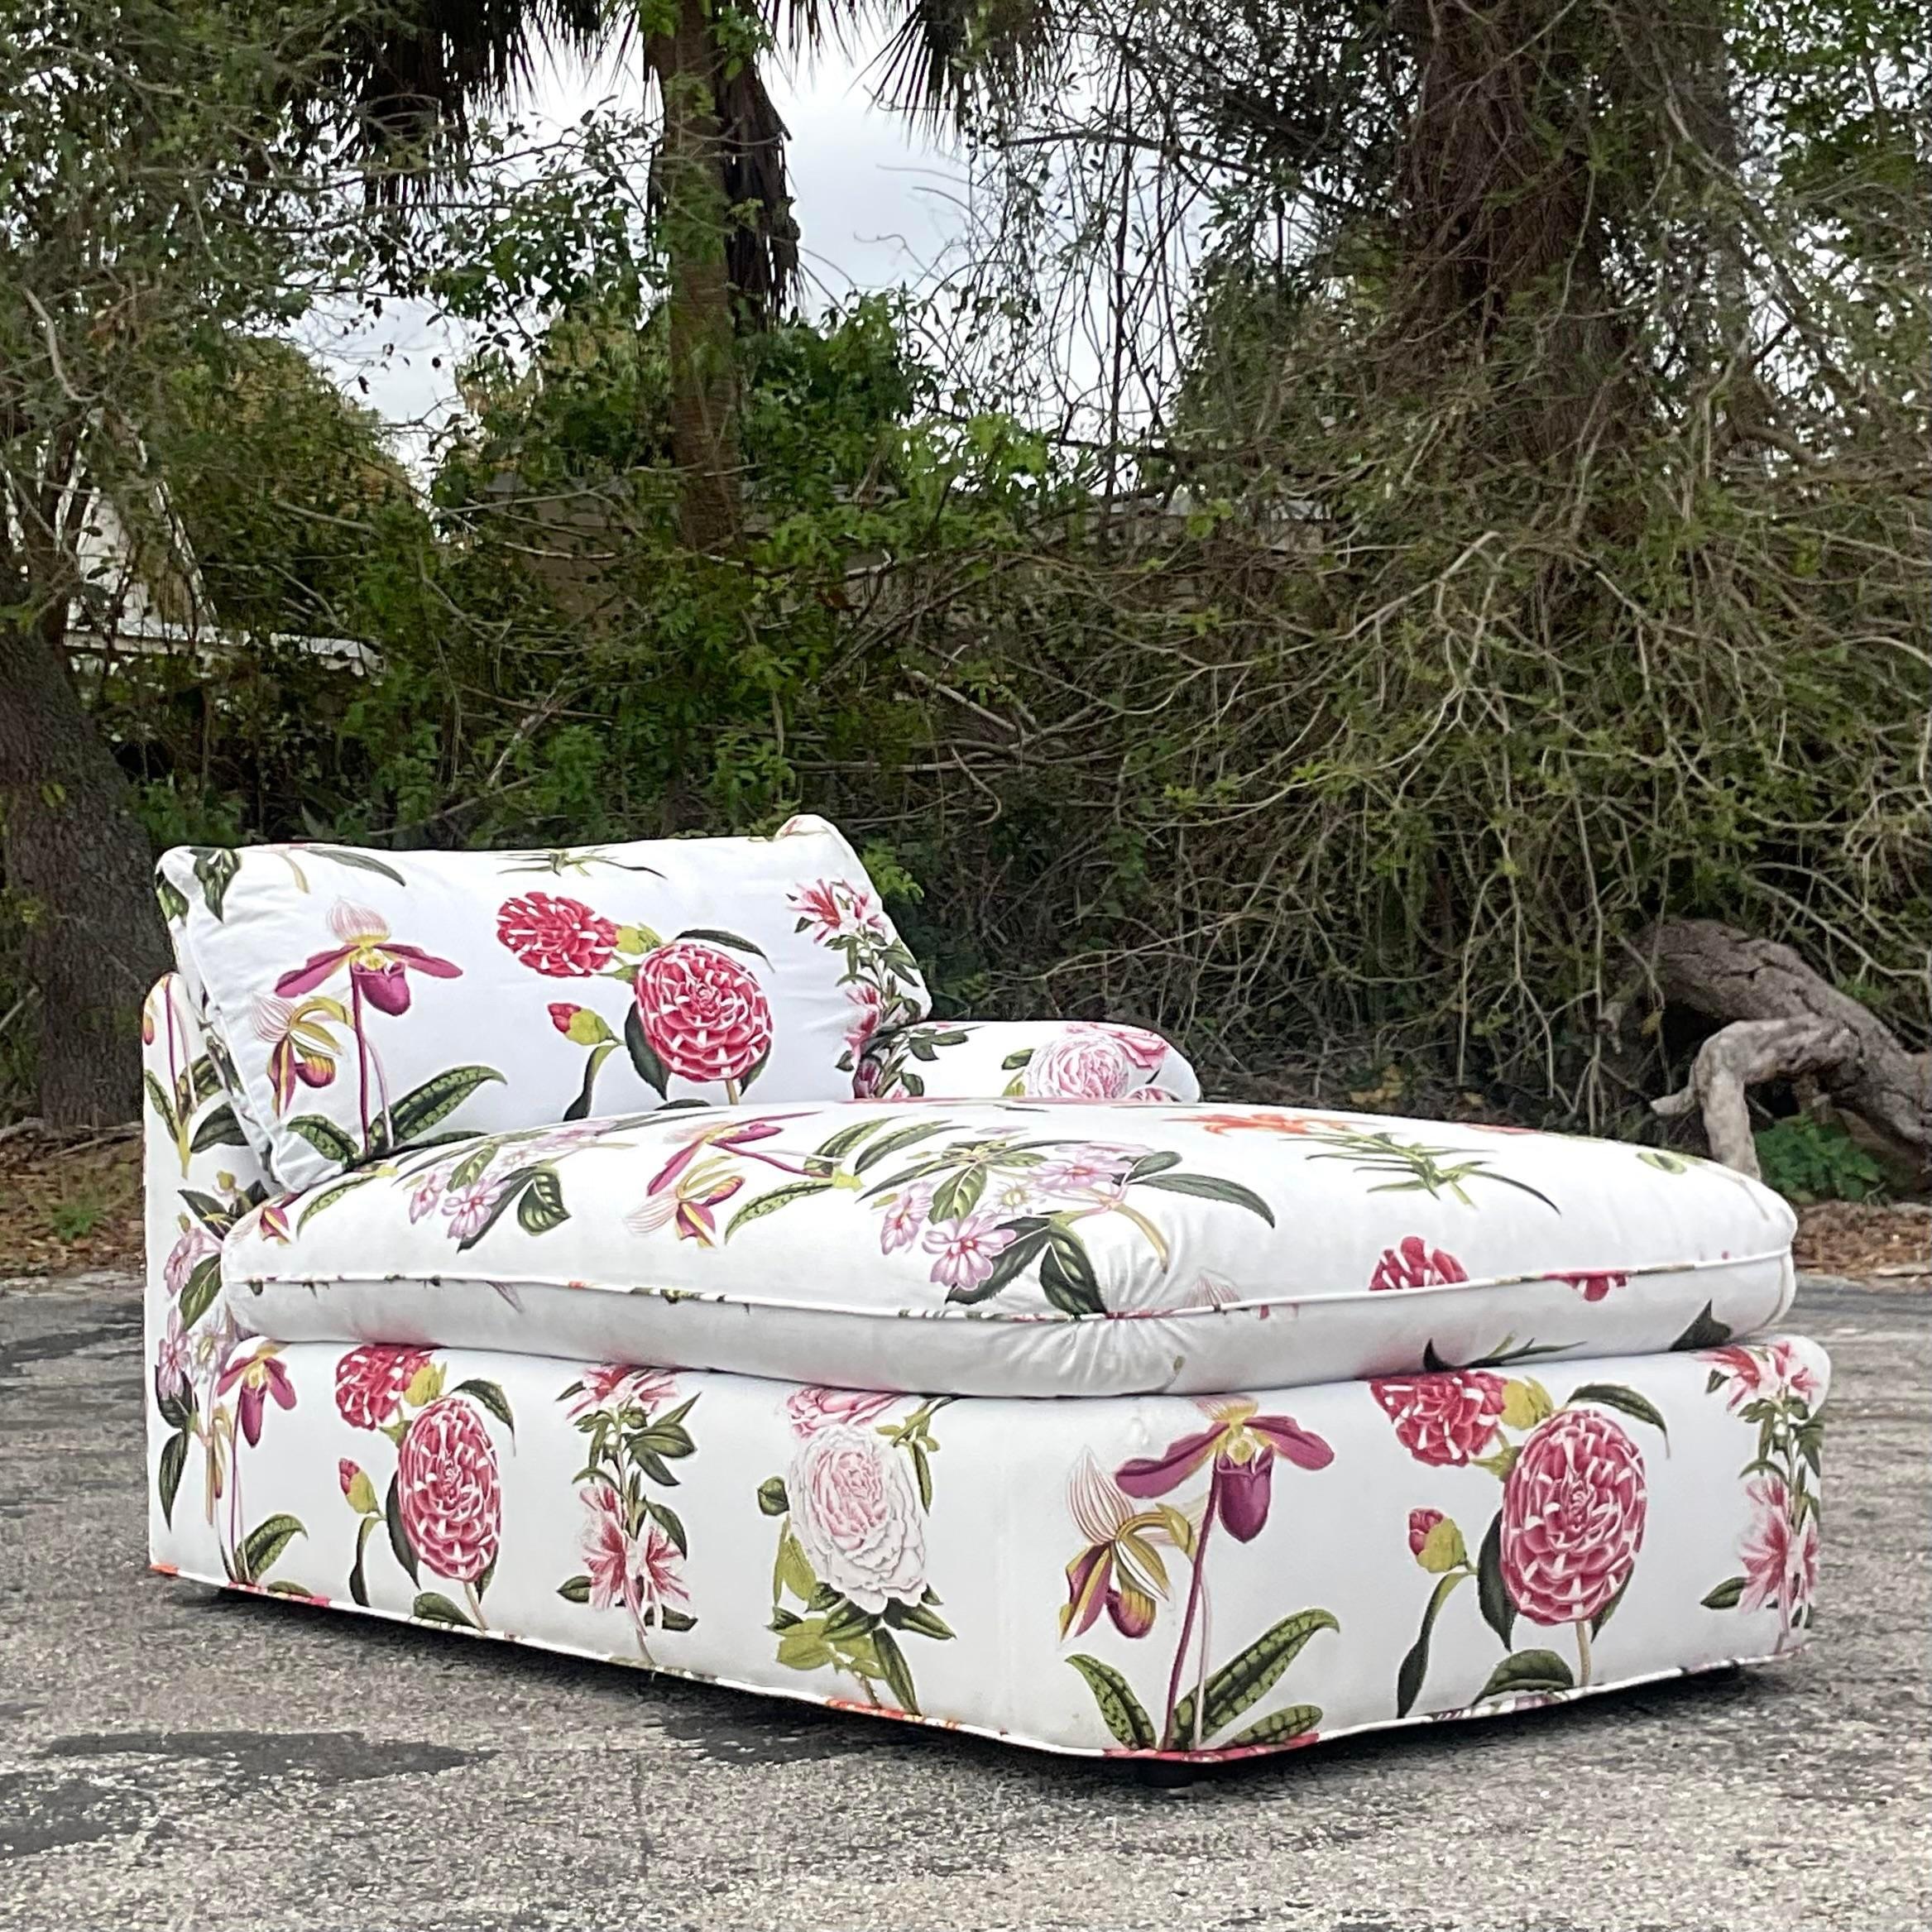 Vintage Regency Printed Floral Down Chaise Lounge 1